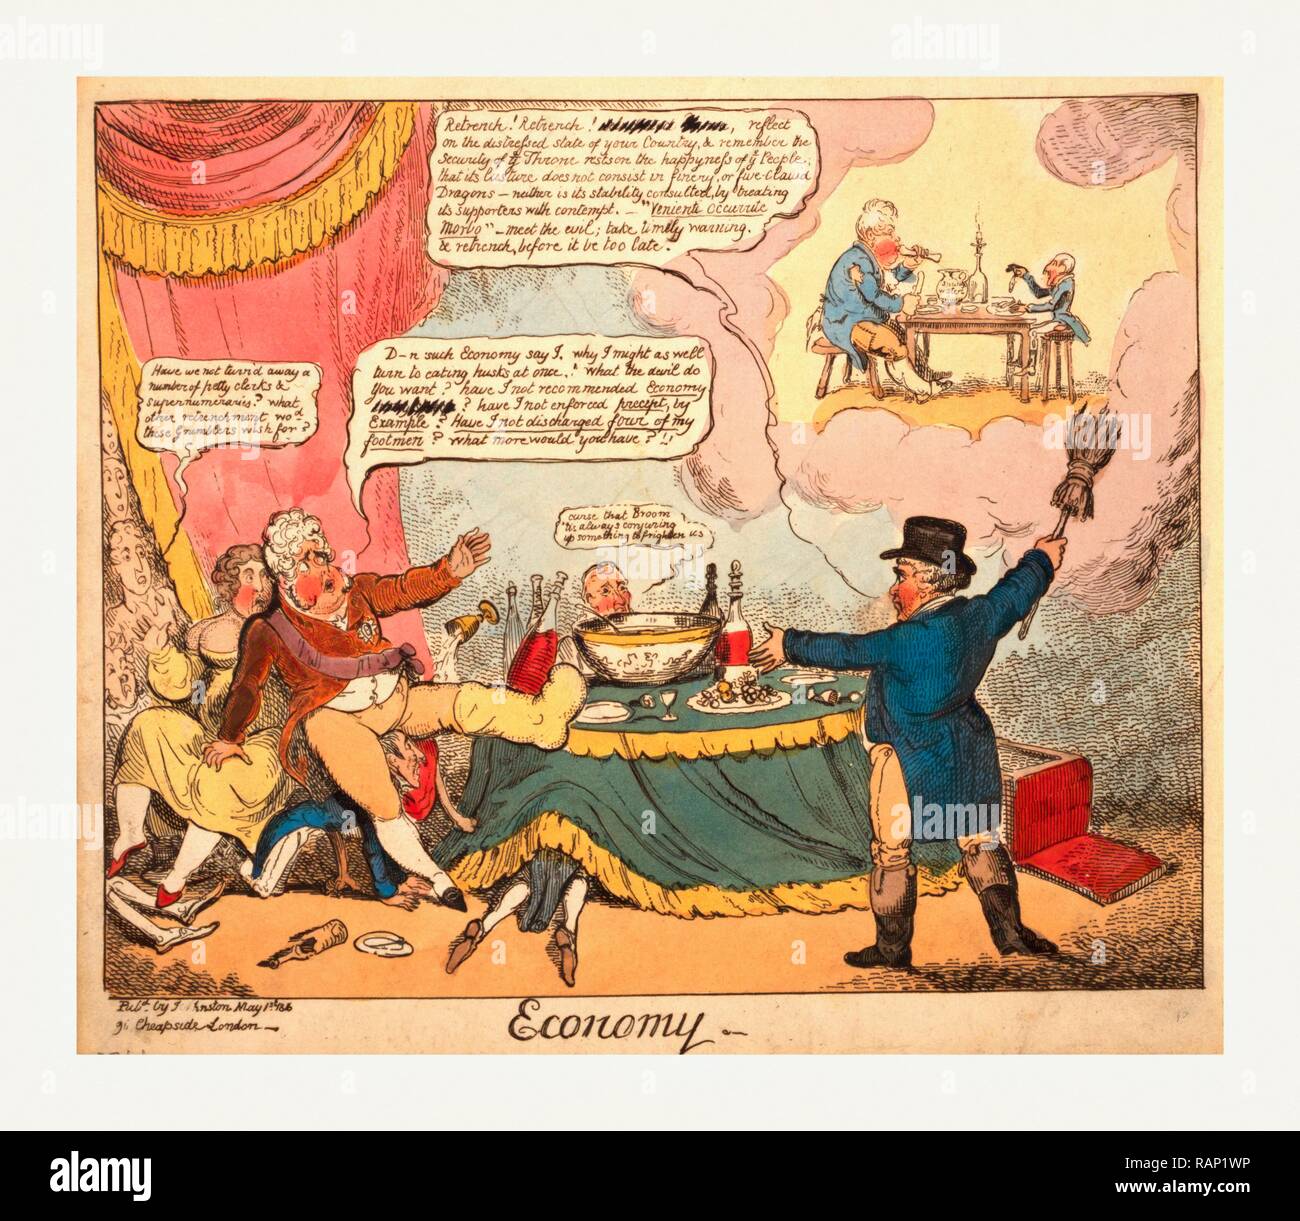 Economy, Cruikshank, George, 1792-1878, artist, London, engraving 1816, Brougham, in the guise of John Bull, appears reimagined Stock Photo